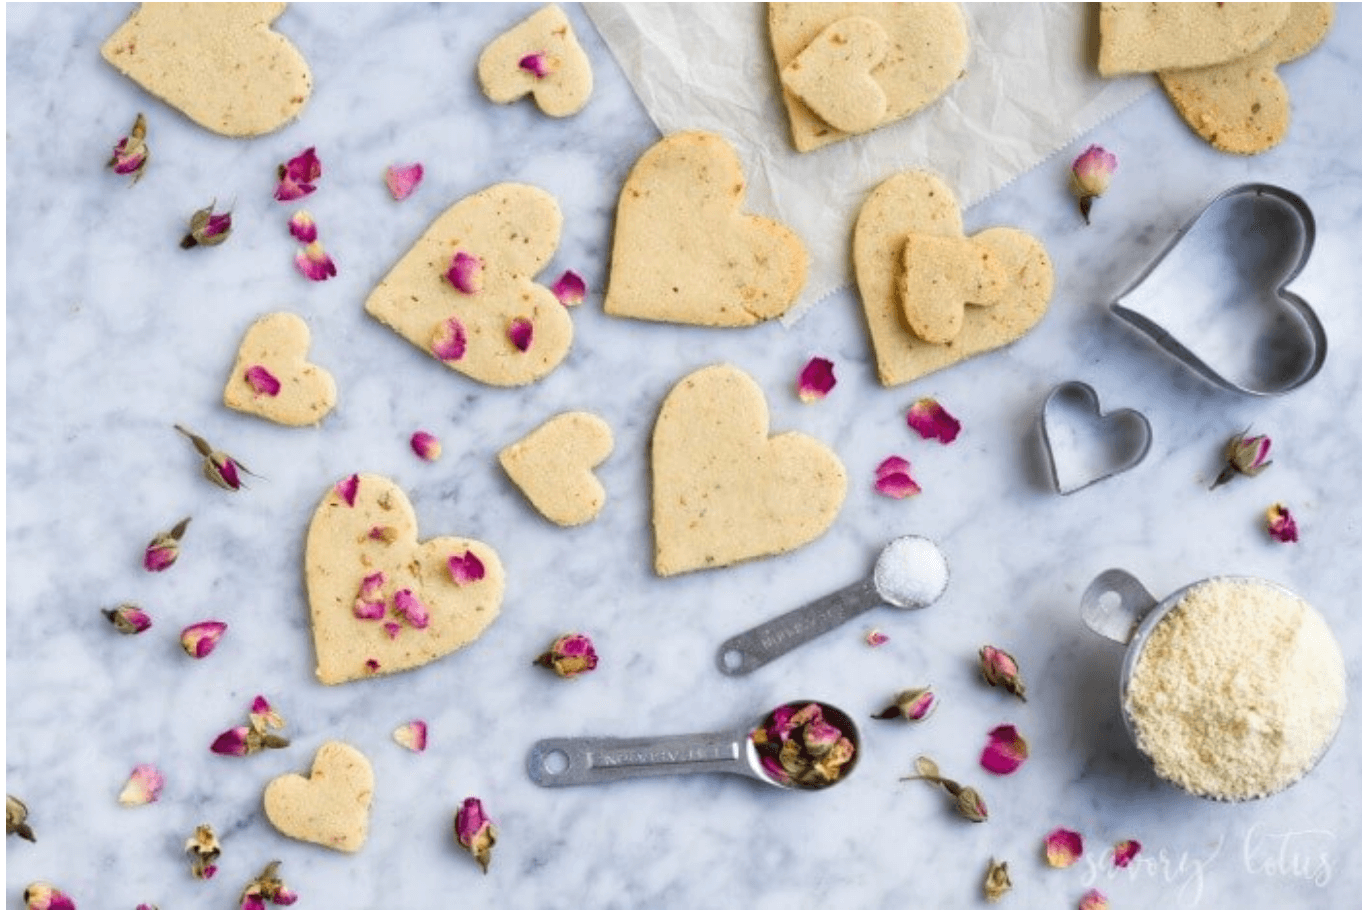 20 Healthy Edible Gift Ideas | rose shortbread cookies